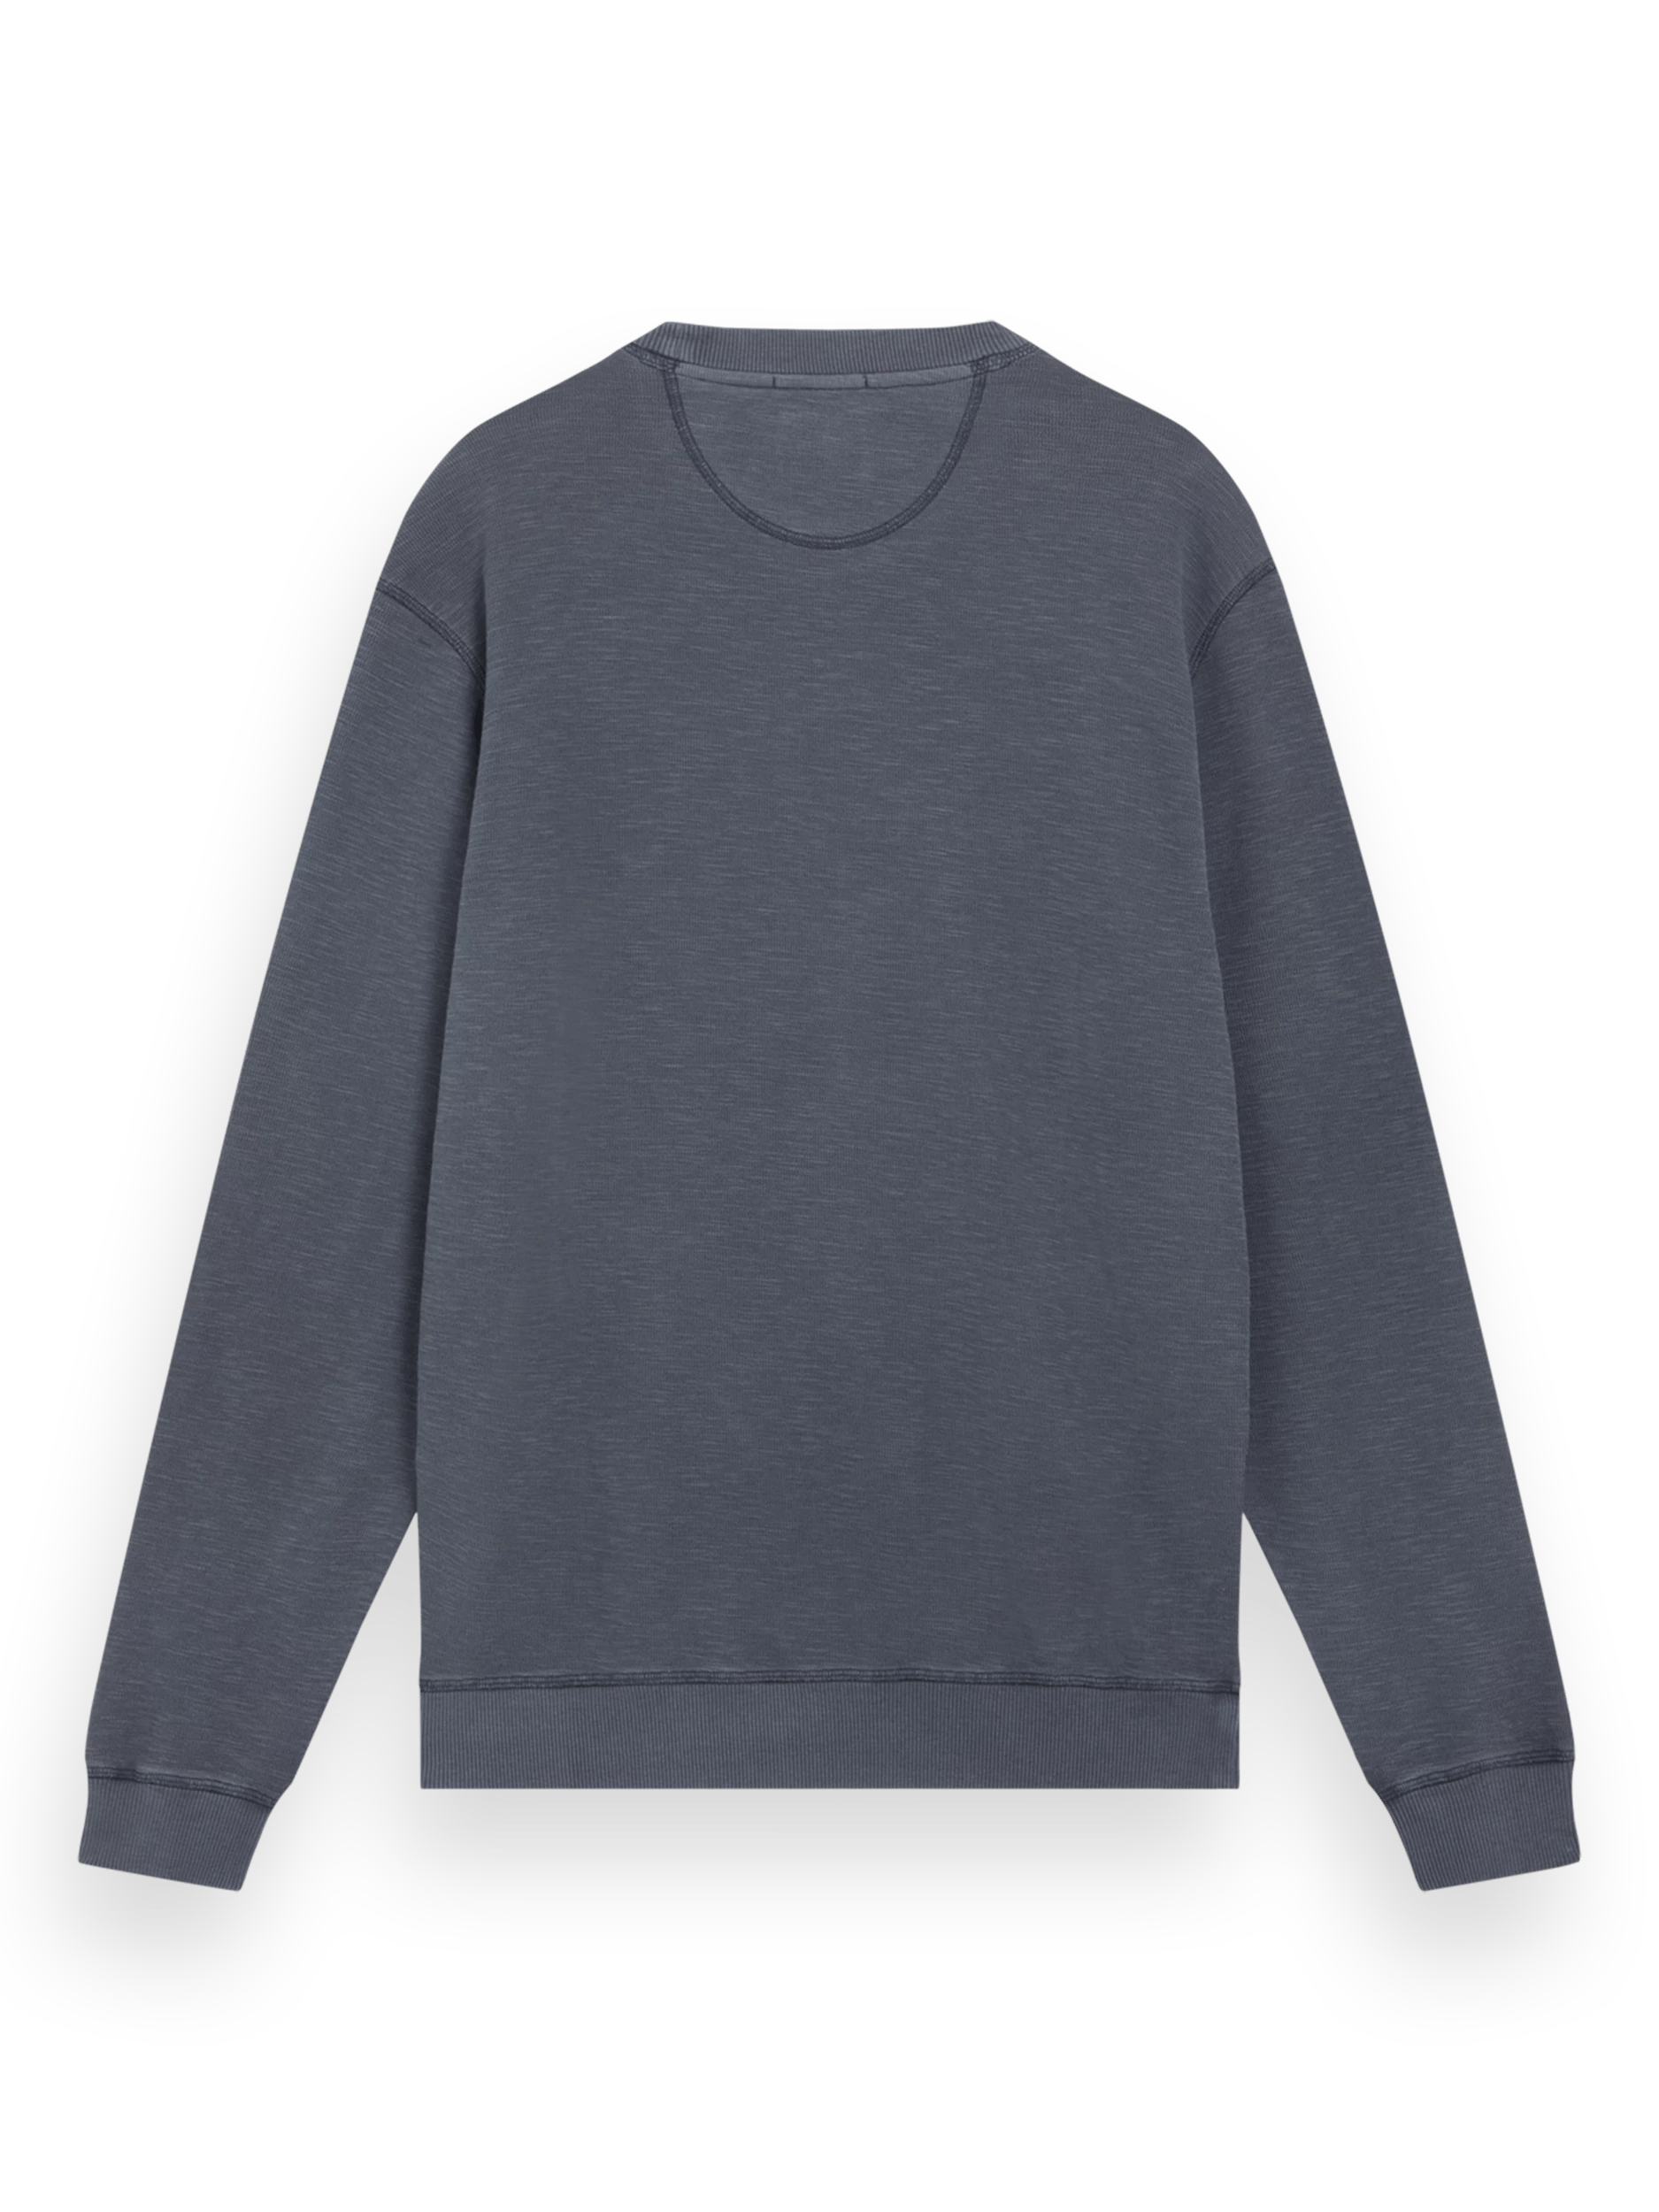 Scotch & Soda Garment-dyed crewneck sweatshirt BCK